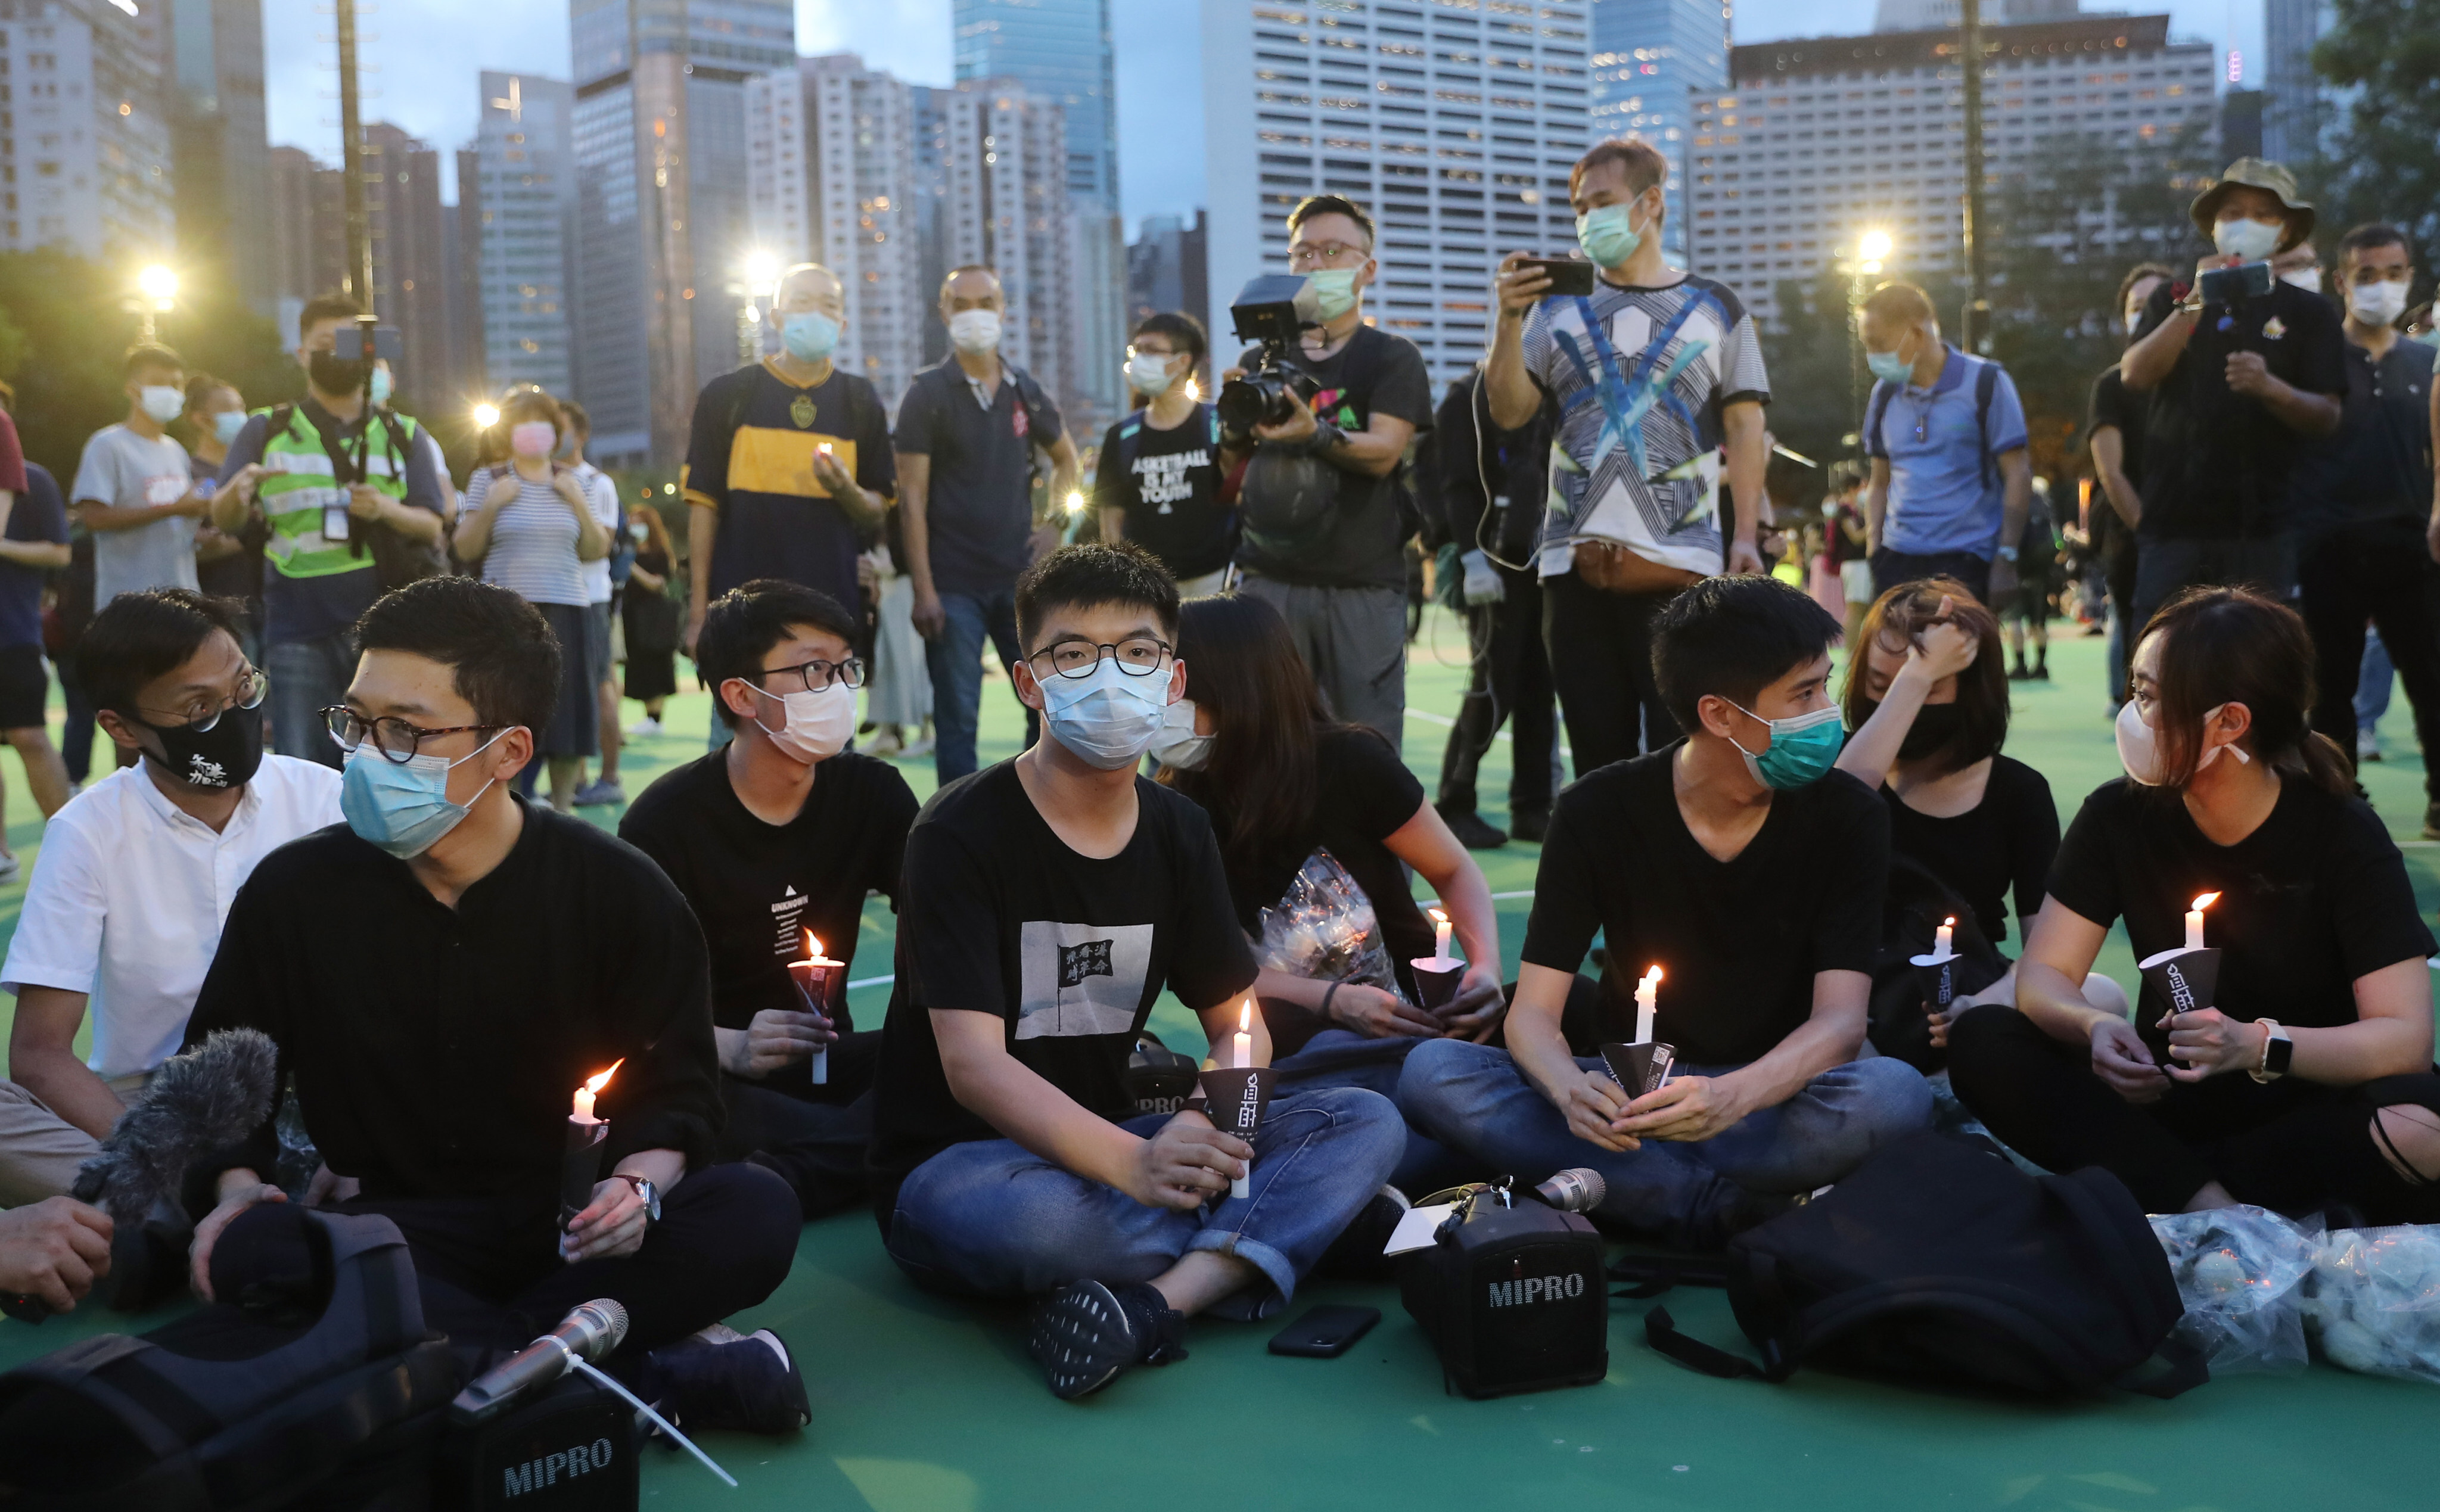 Opposition activist Joshua Wong (centre) at the banned Tiananmen Square vigil in 2020. Photo: Sam Tsang